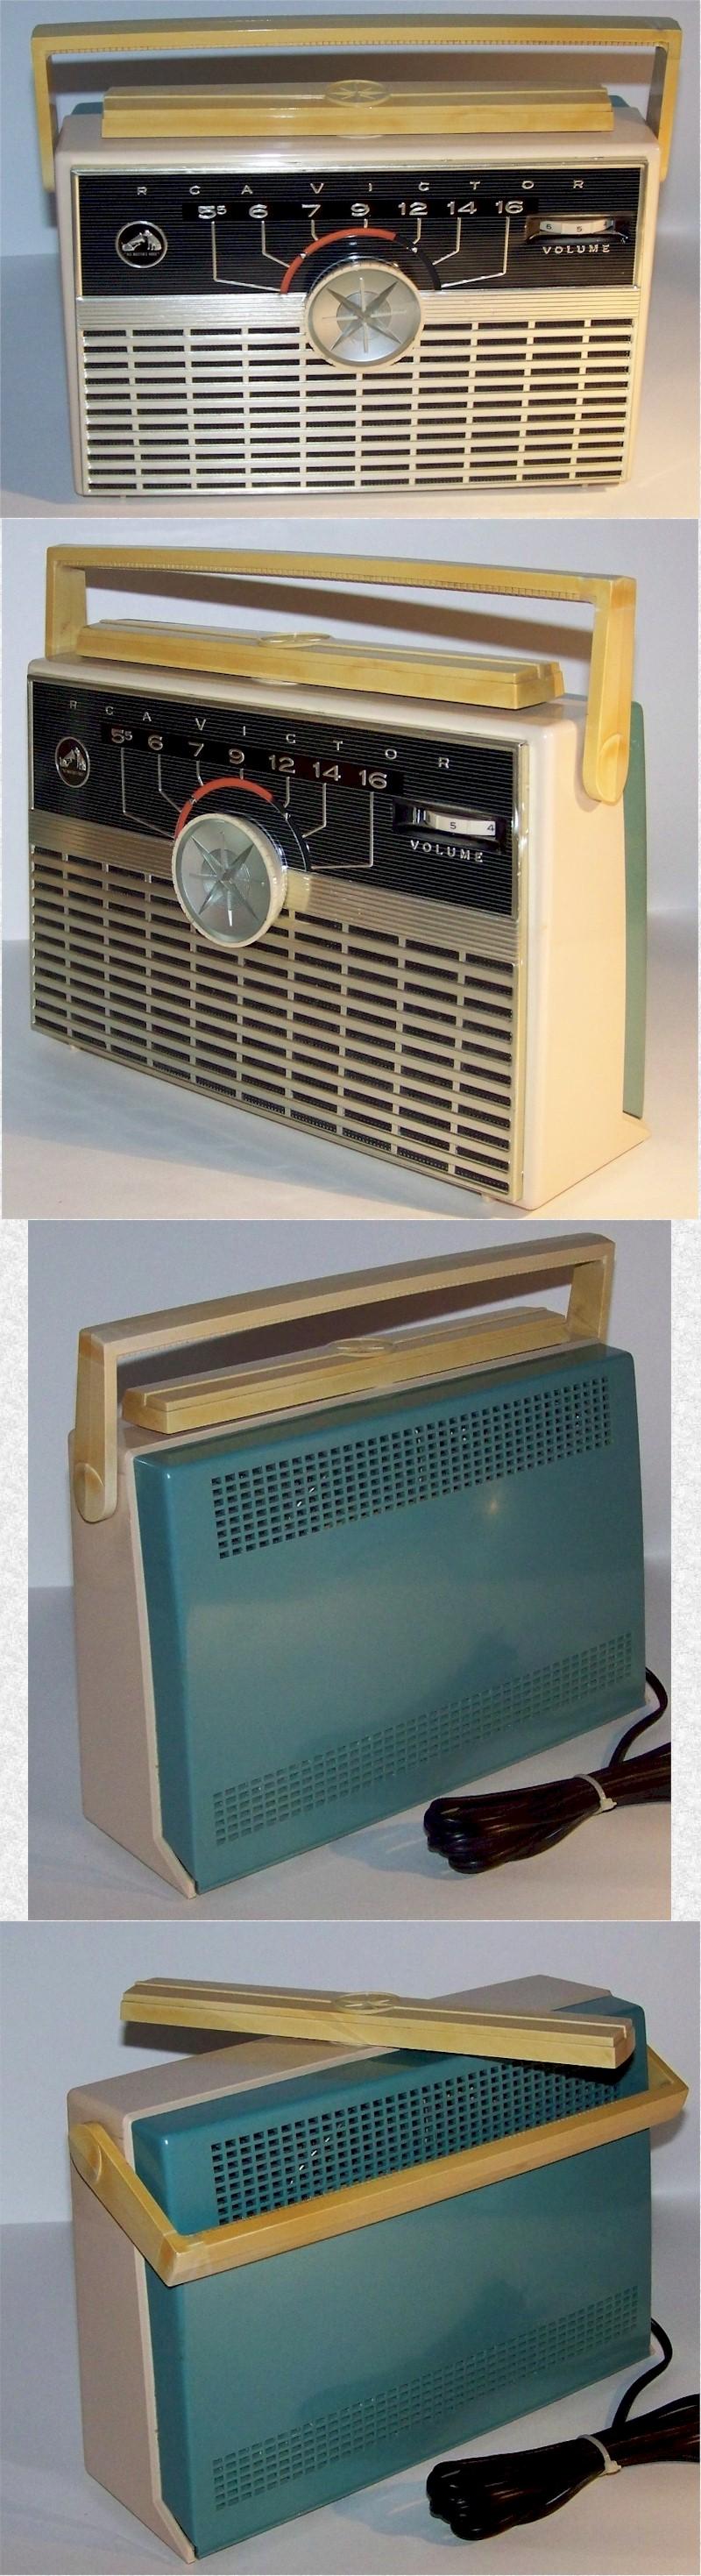 RCA 1-BX79 Portable (1958)